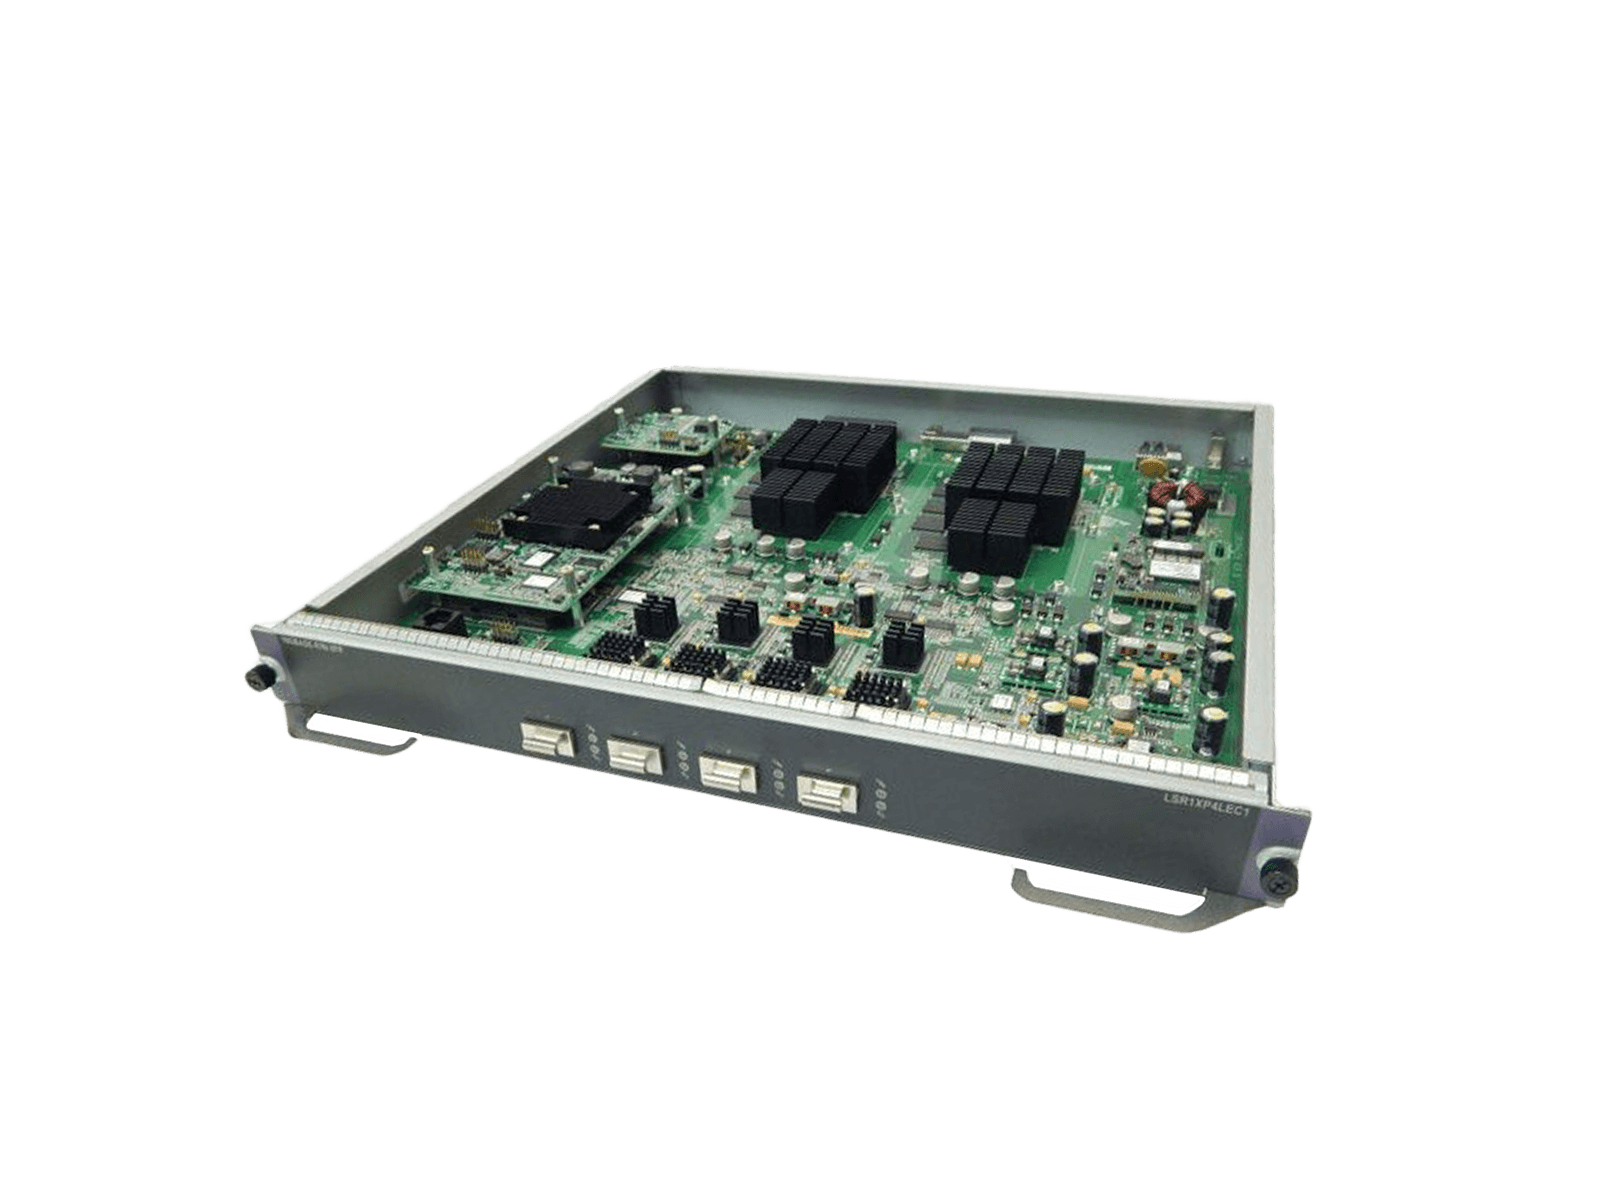 HP JC118A 9500 A9500 S9500E Switch Series 4 Port 10GbE XFP Advanced Module.